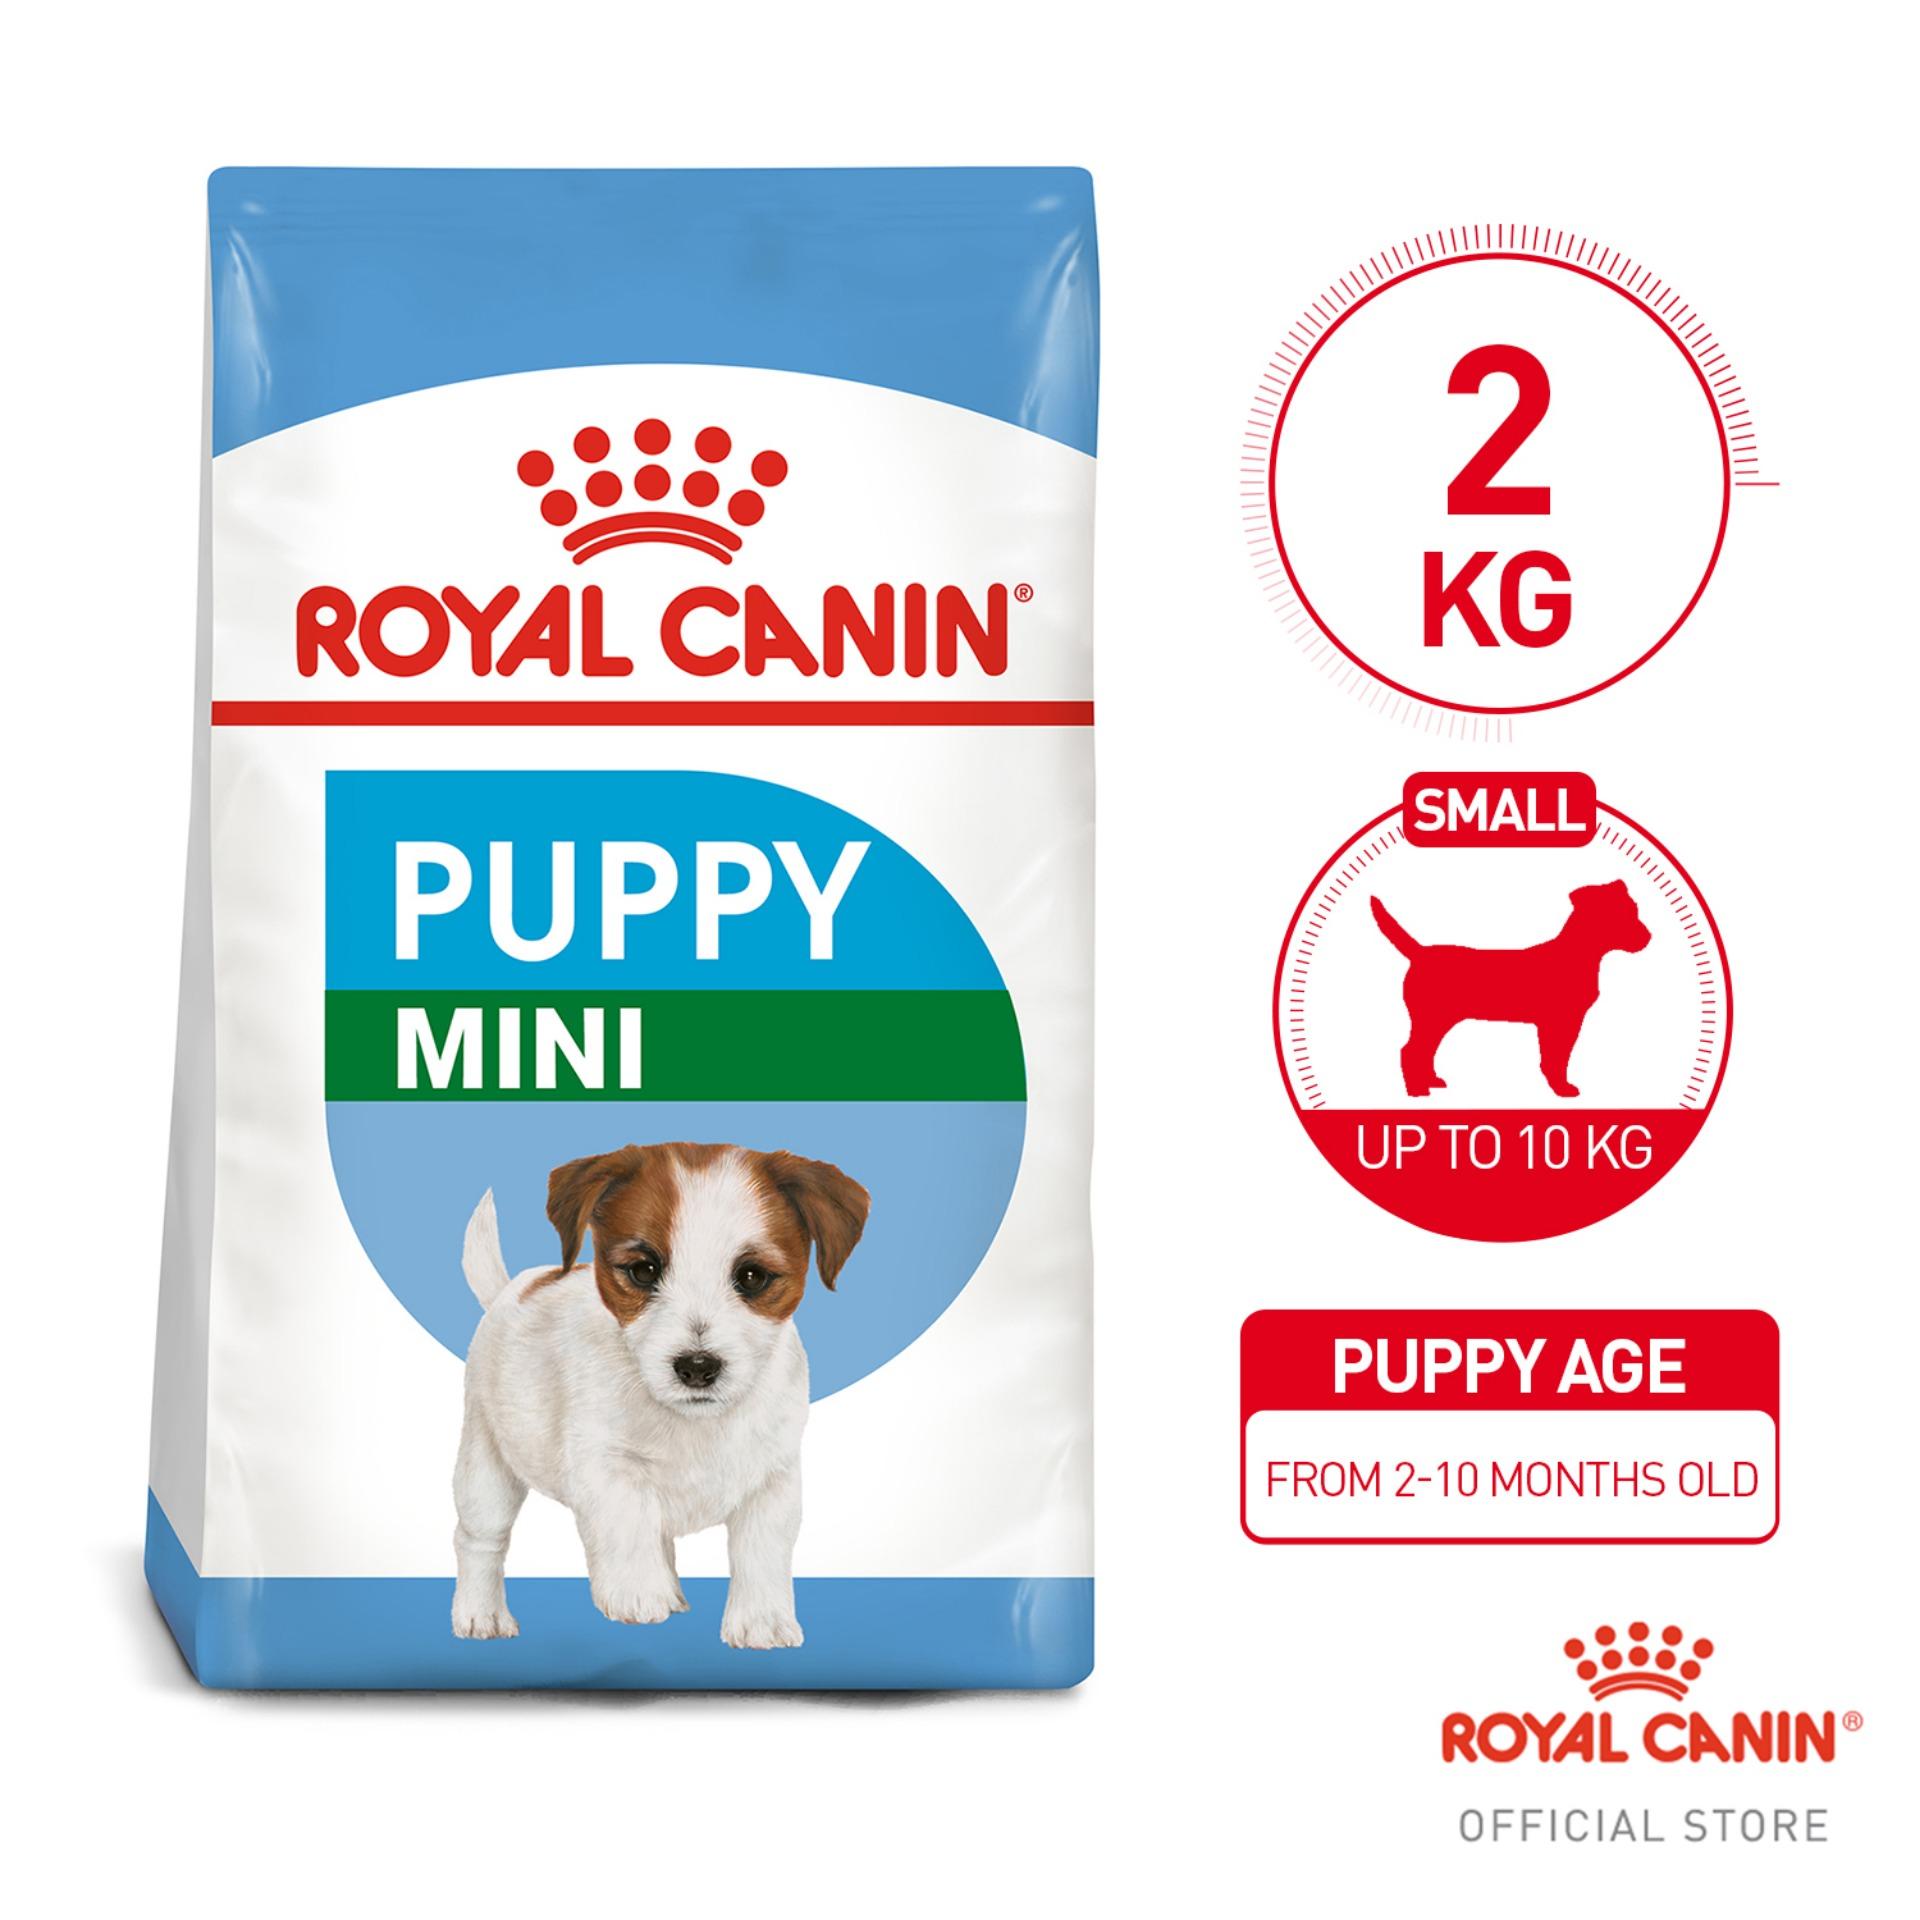 royal canin 2kg